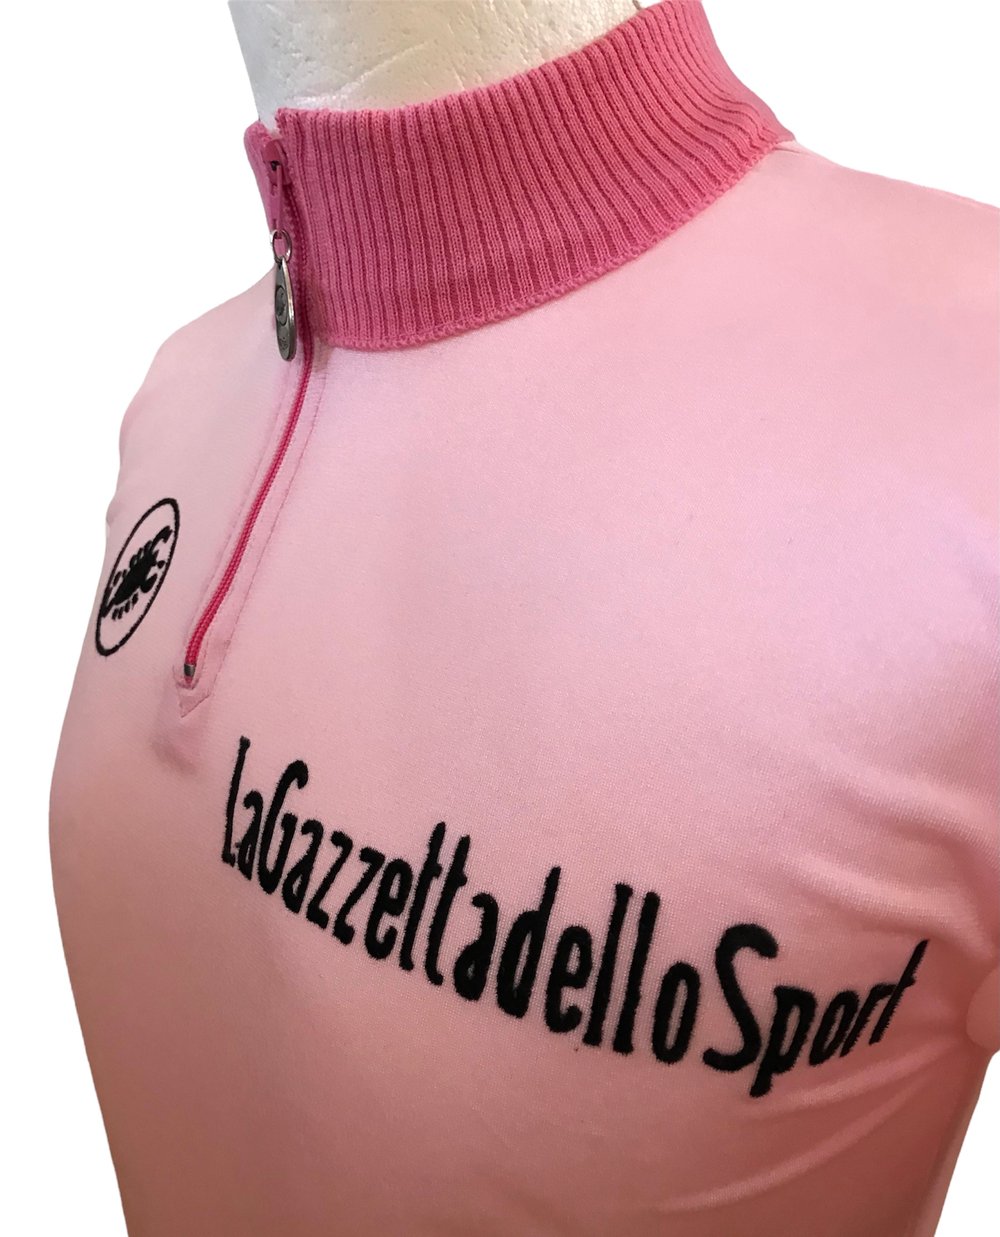 1983 Giro dâ€™Italia General Classification ðŸ‡®ðŸ‡¹ Original Time Trial jersey